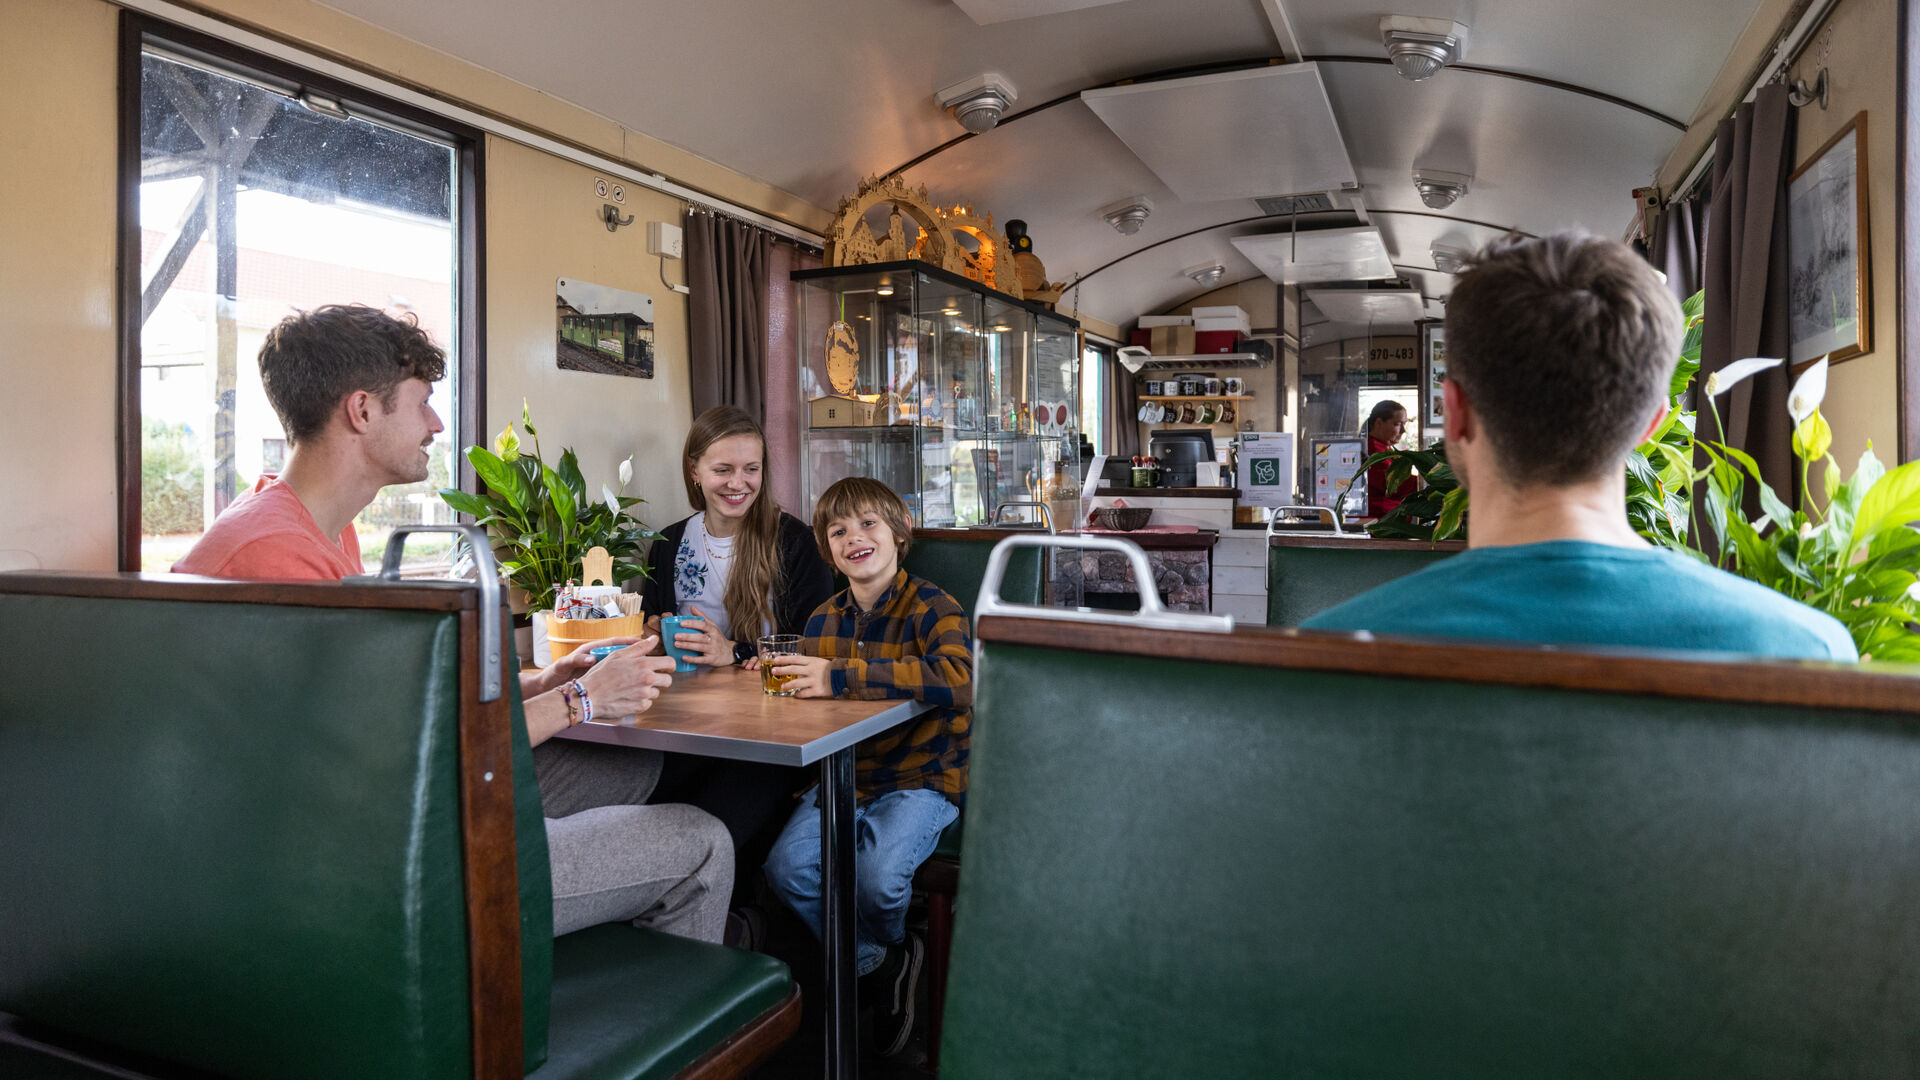 Café im Bimmelbahn-Shop Dippoldiswalde 
© Philipp Herfort